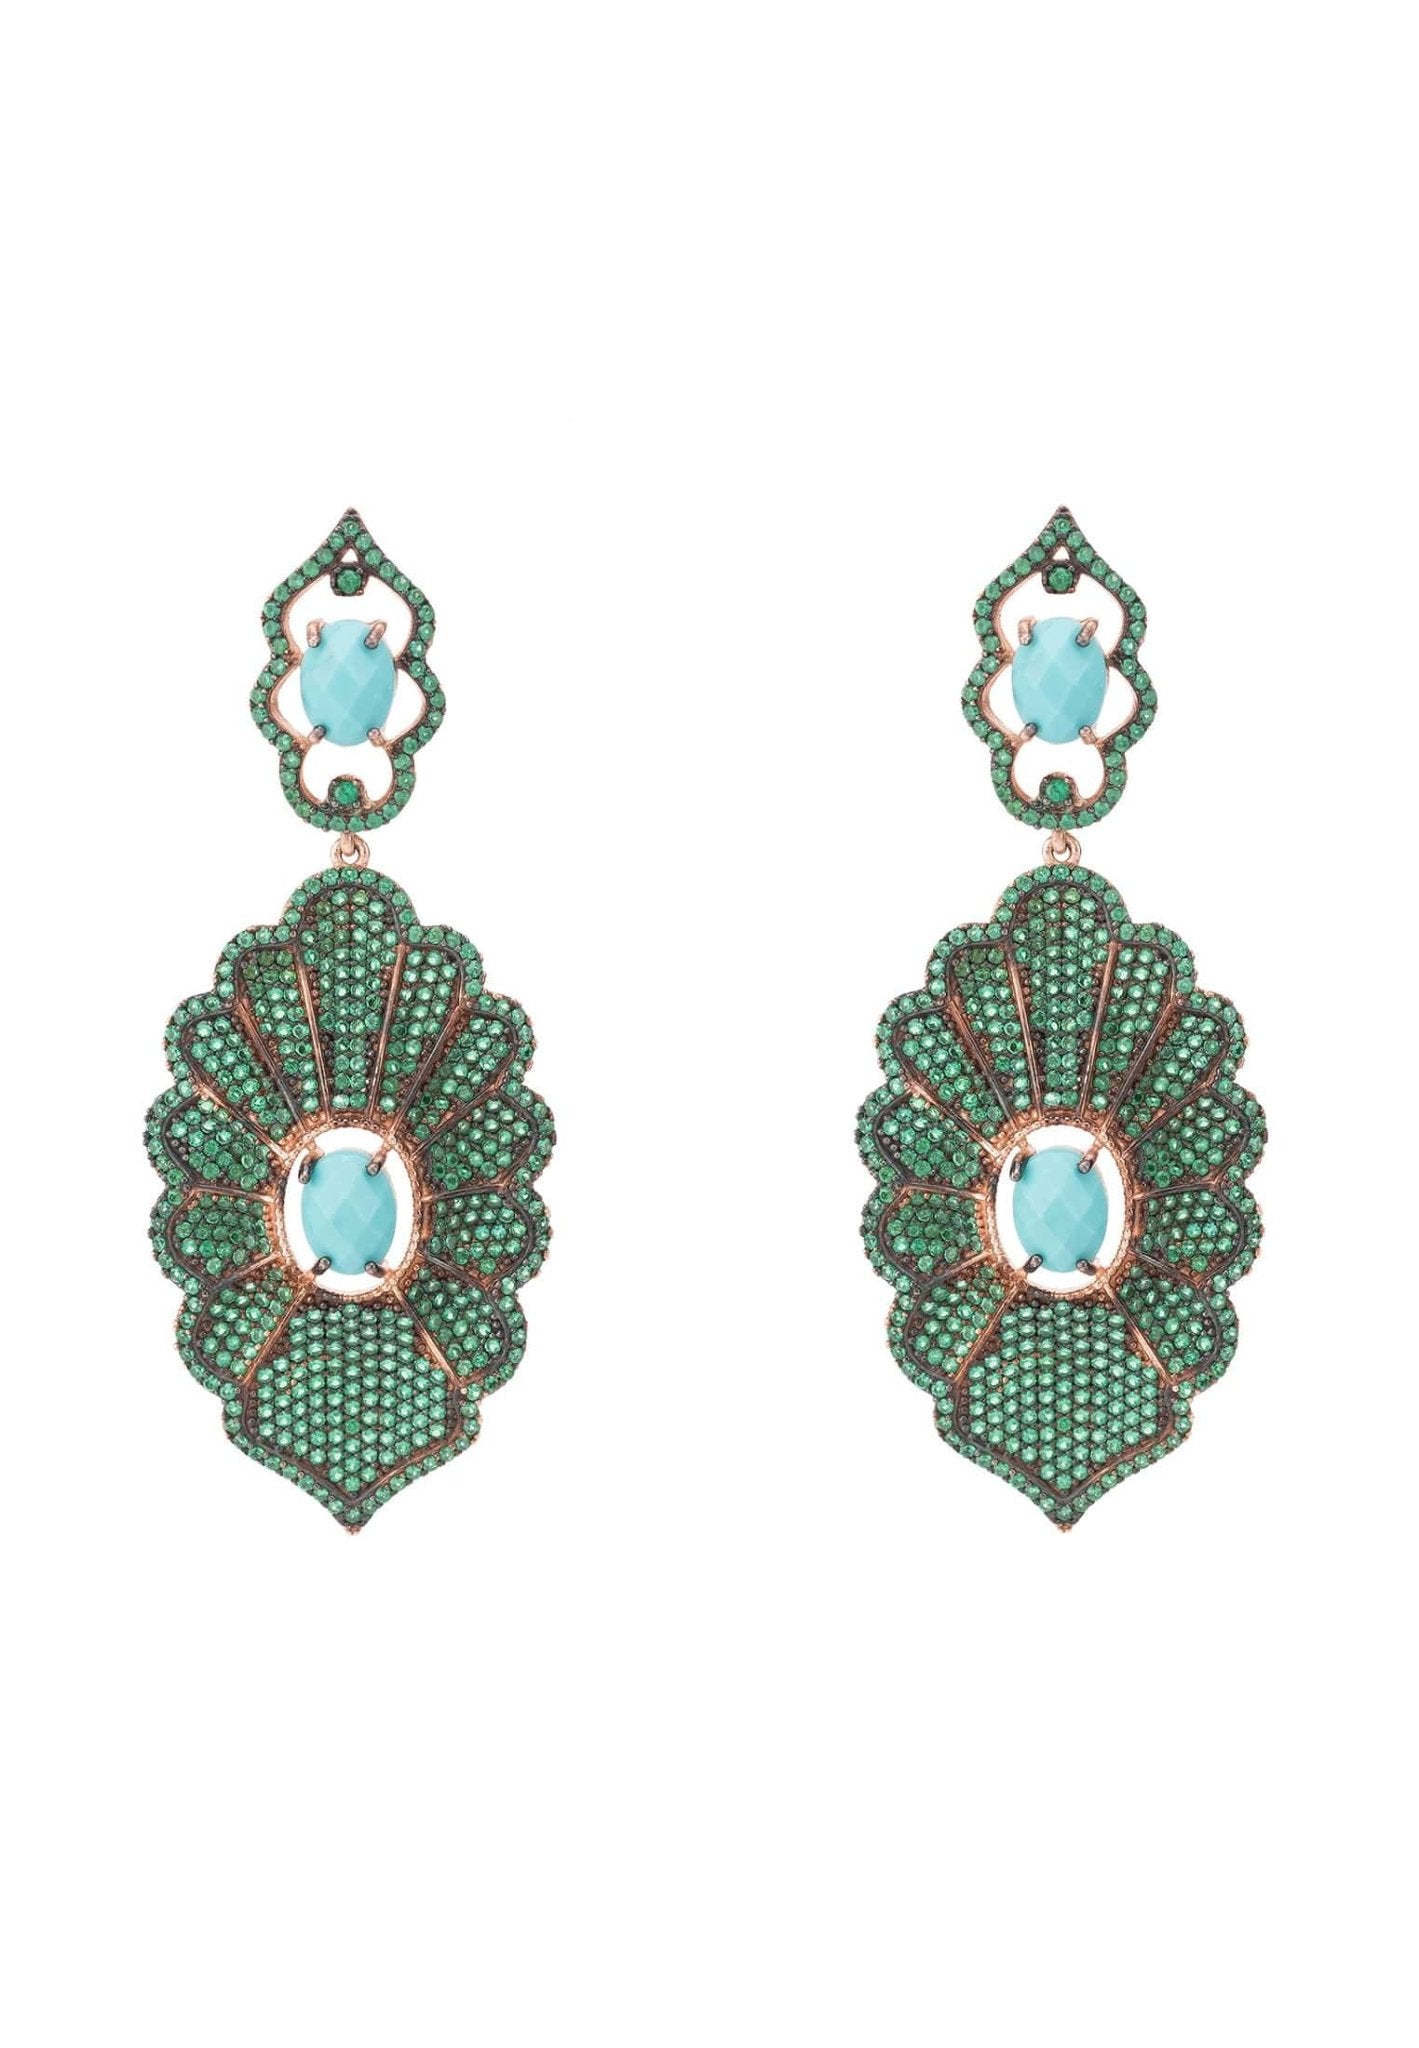 Danbury Earrings Green Turquoise - LATELITA Earrings